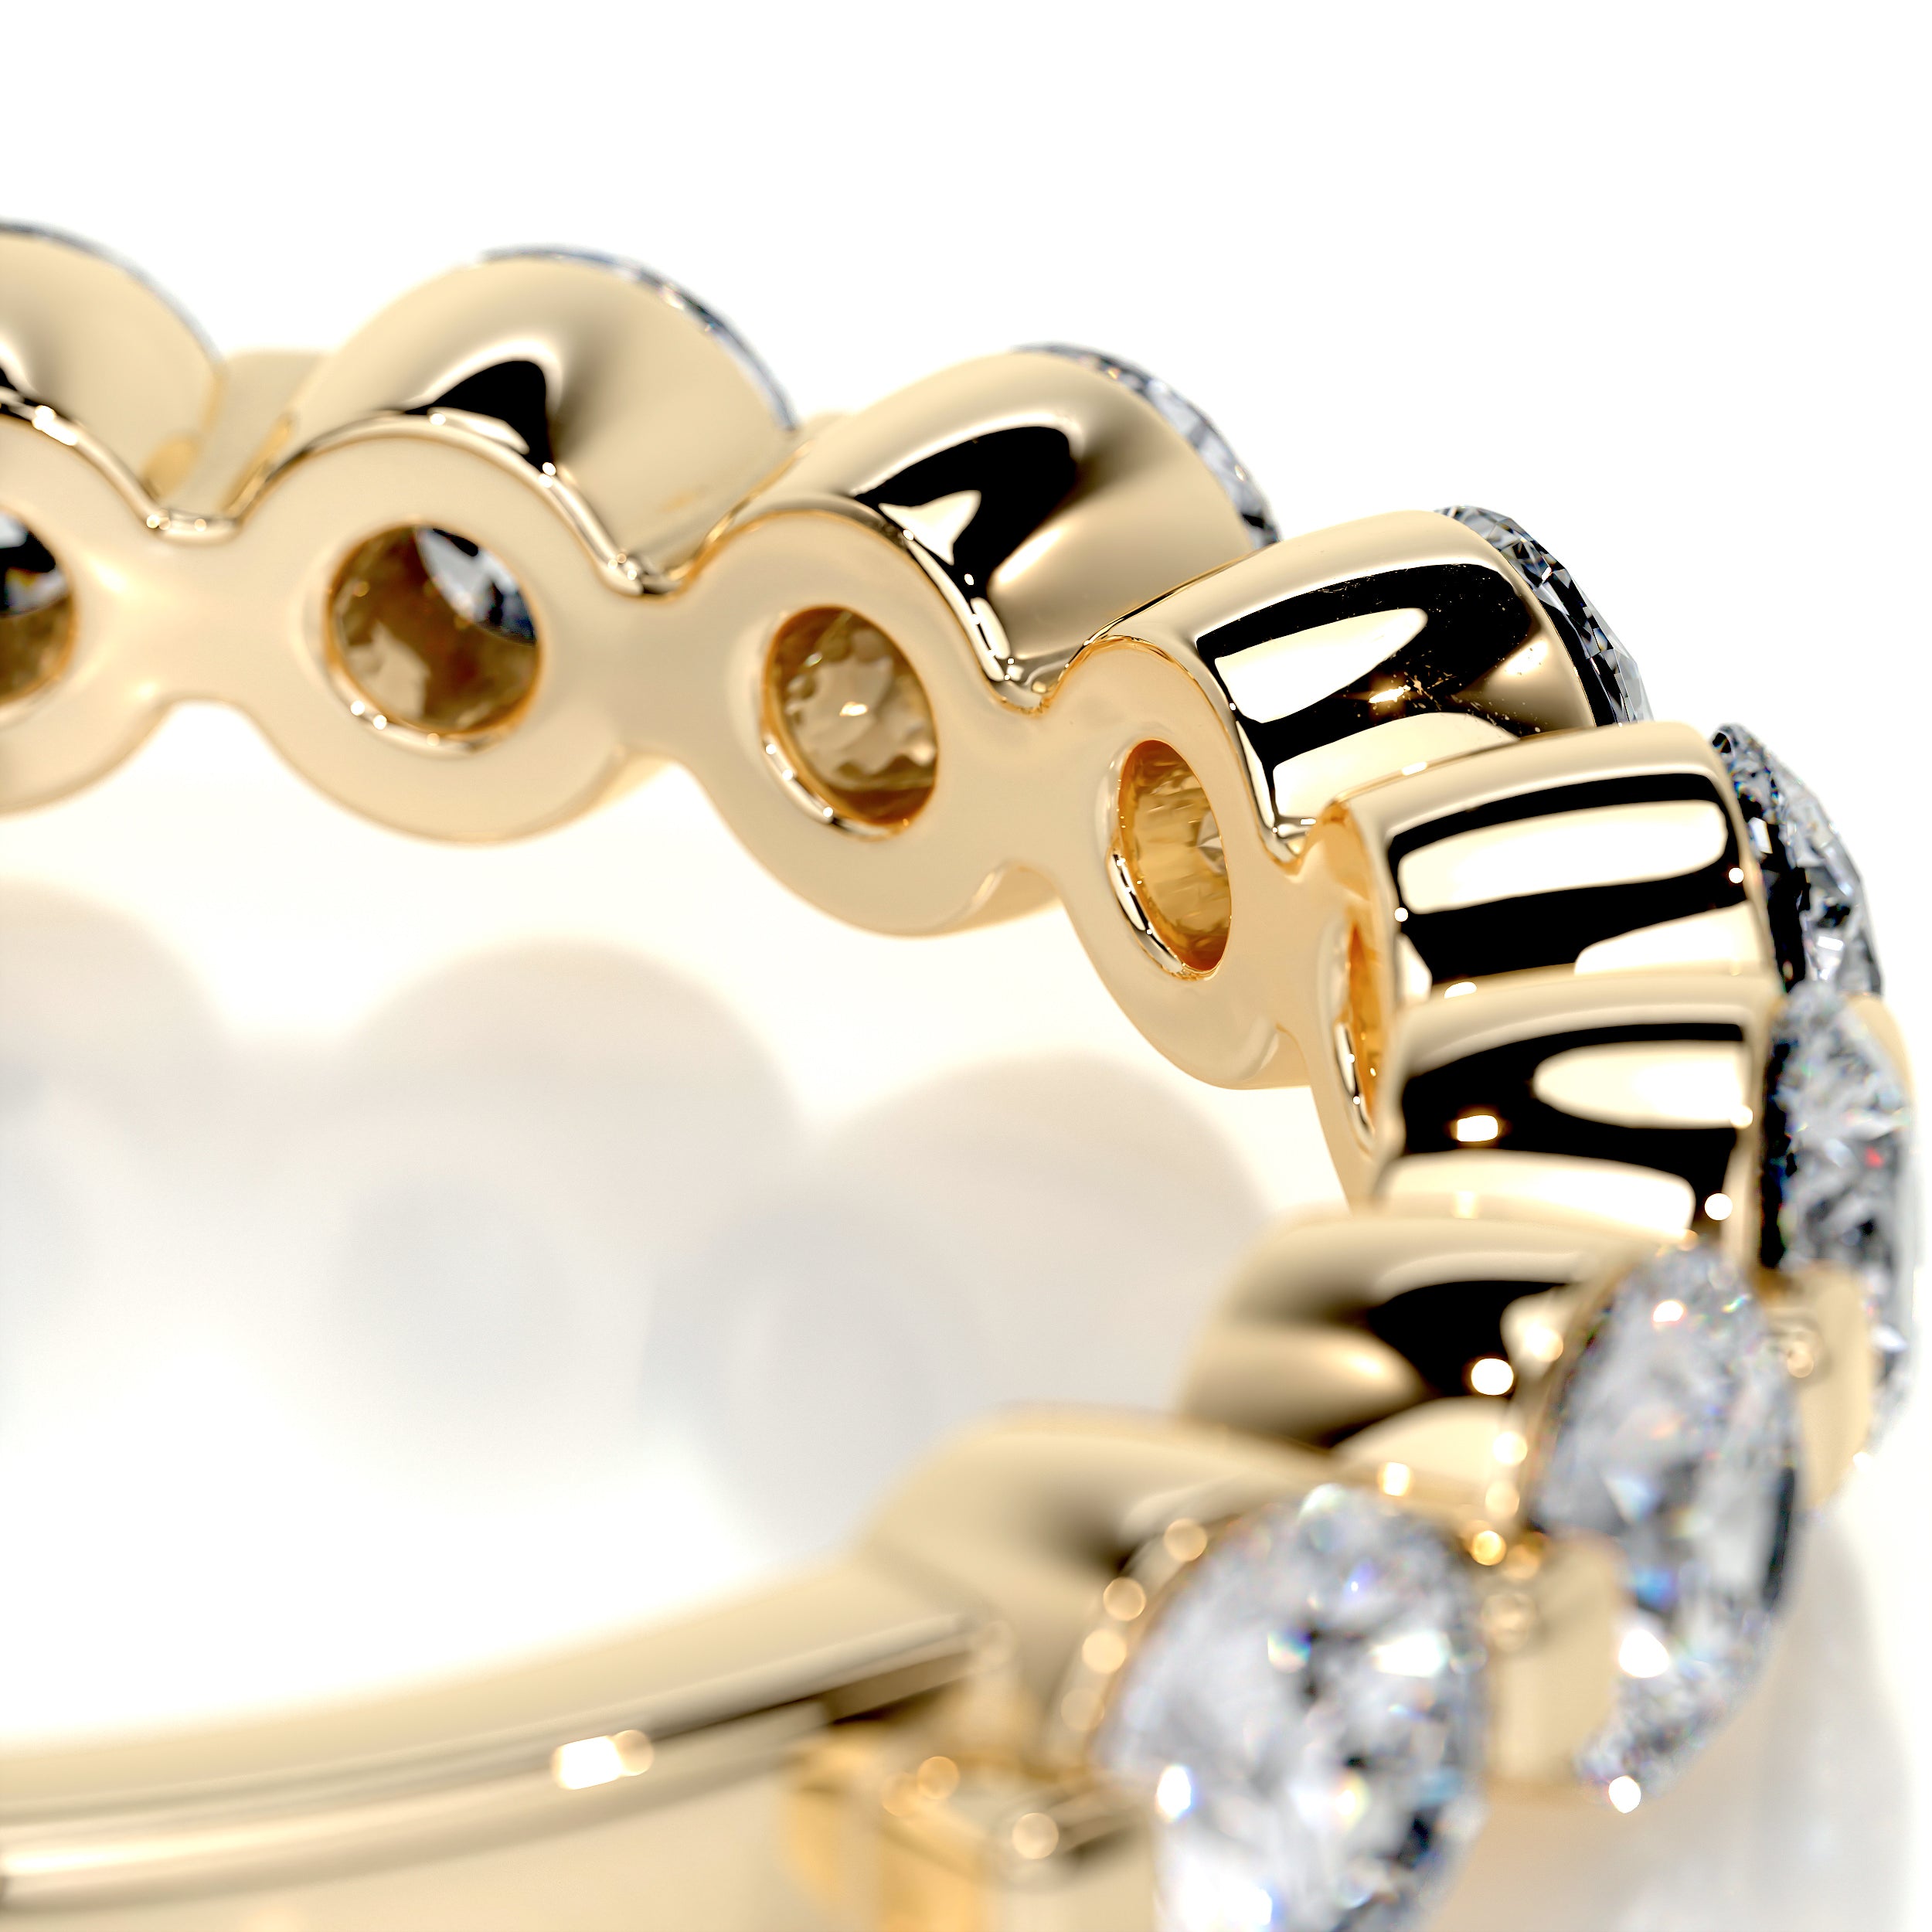 Josie Half-Eternity Wedding Ring   (1 Carat) -18K Yellow Gold